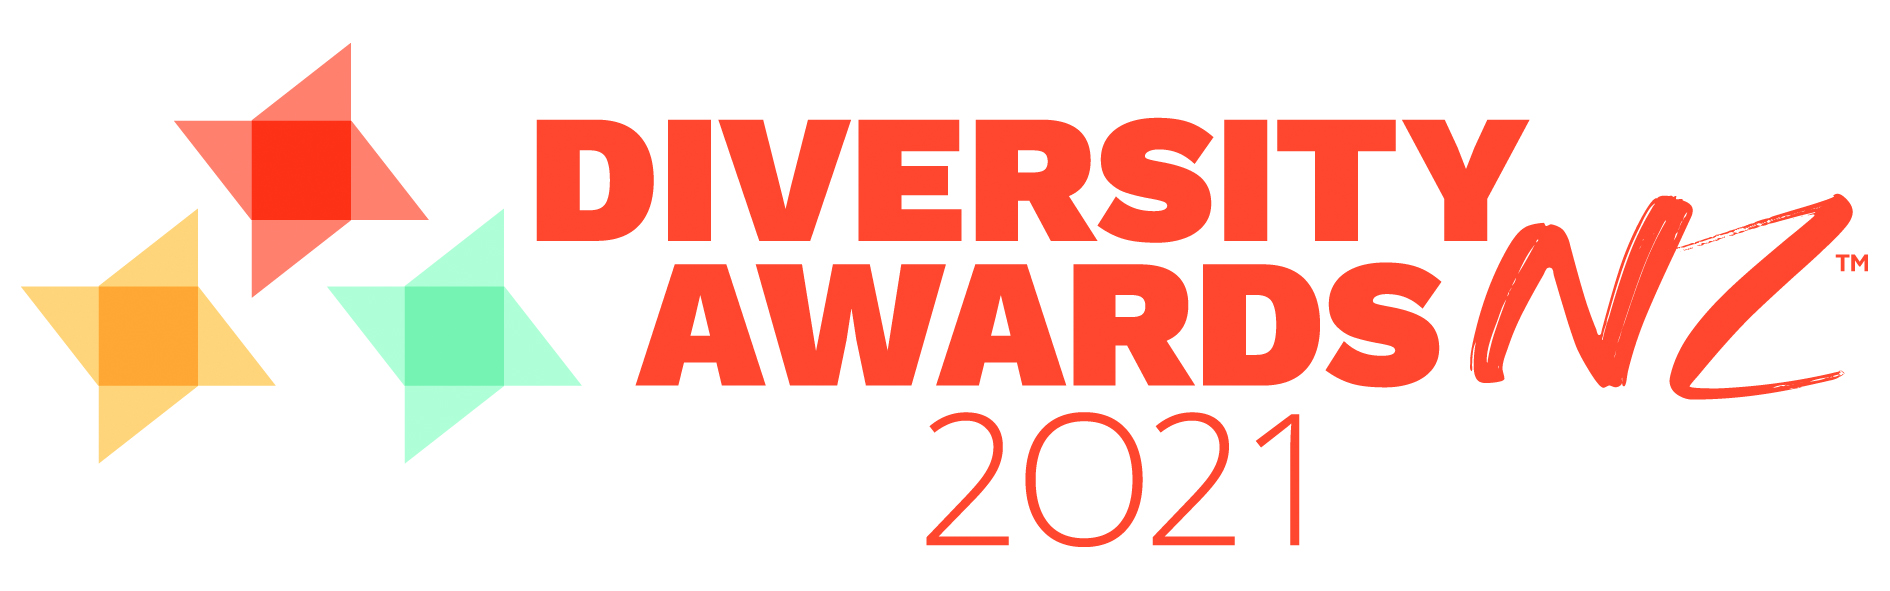 Diversity Awards NZ 2021 logo